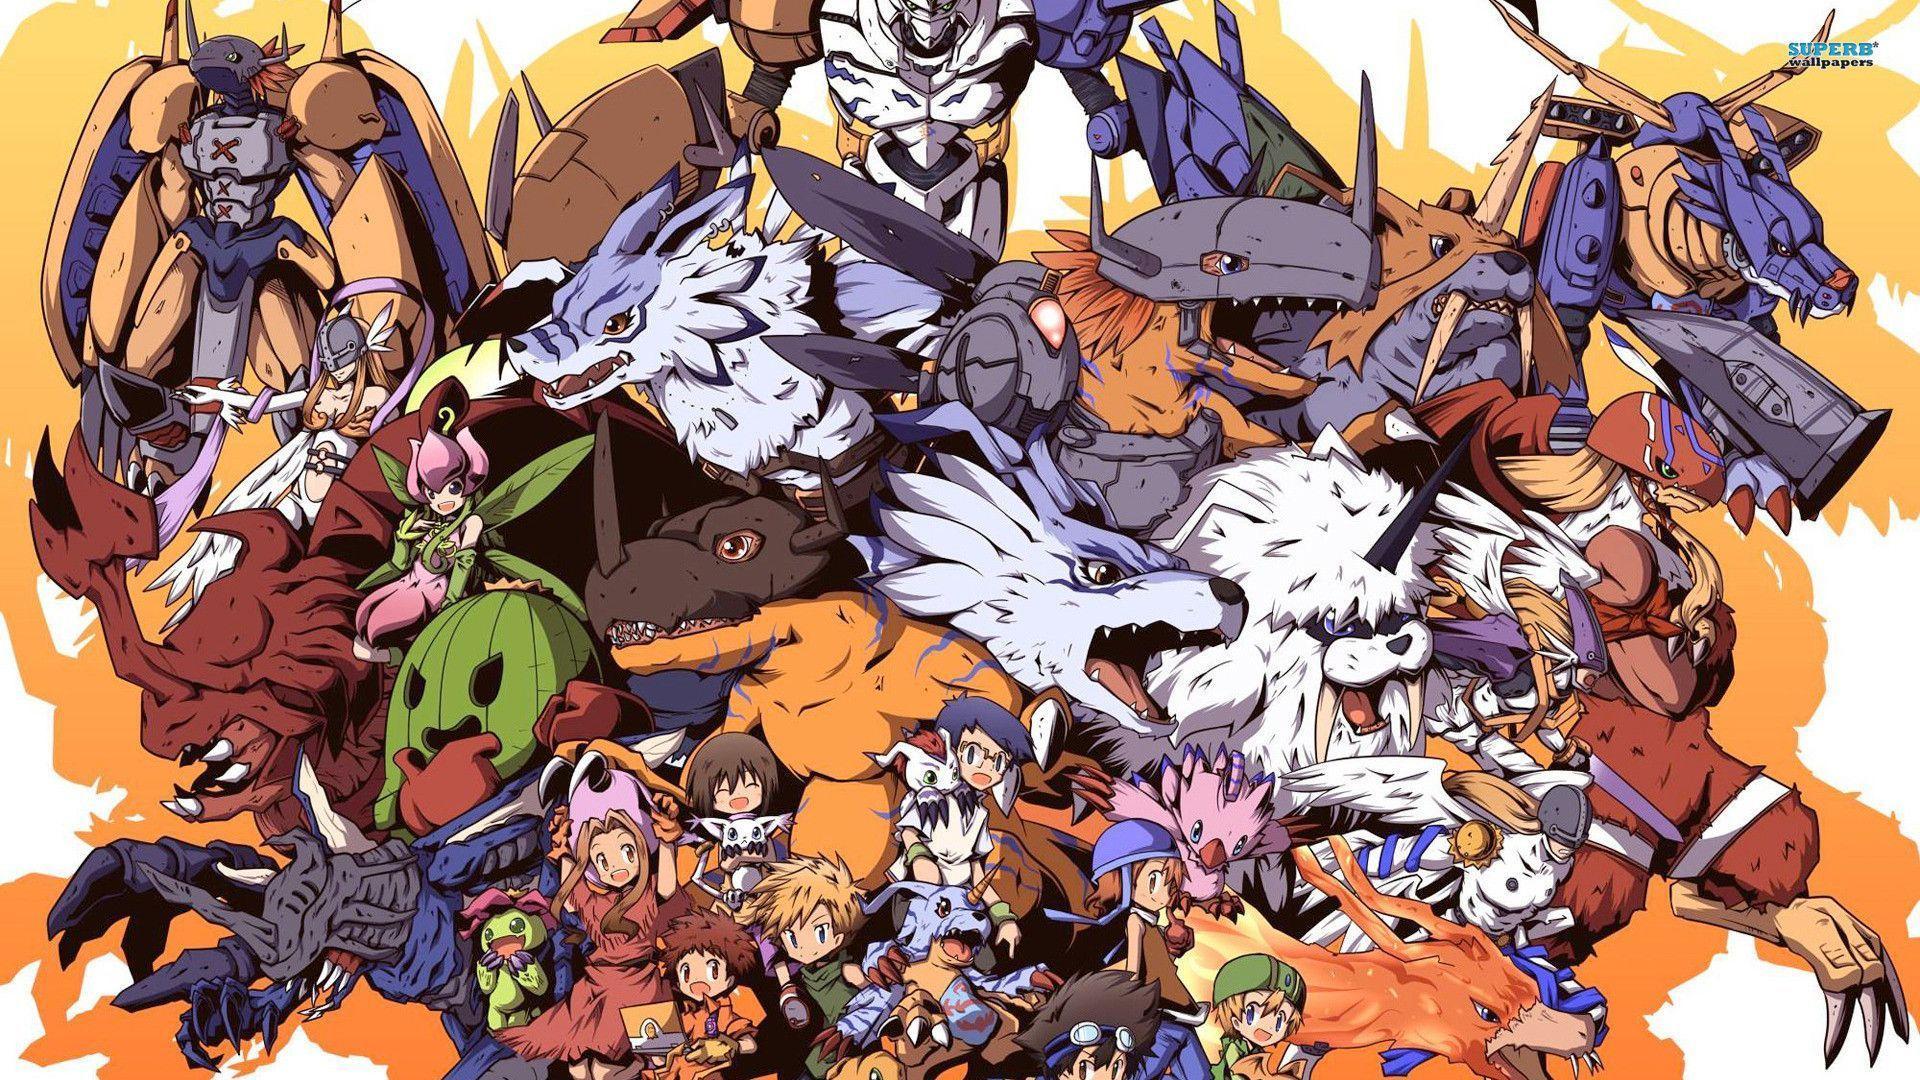 Digimon World Wallpapers